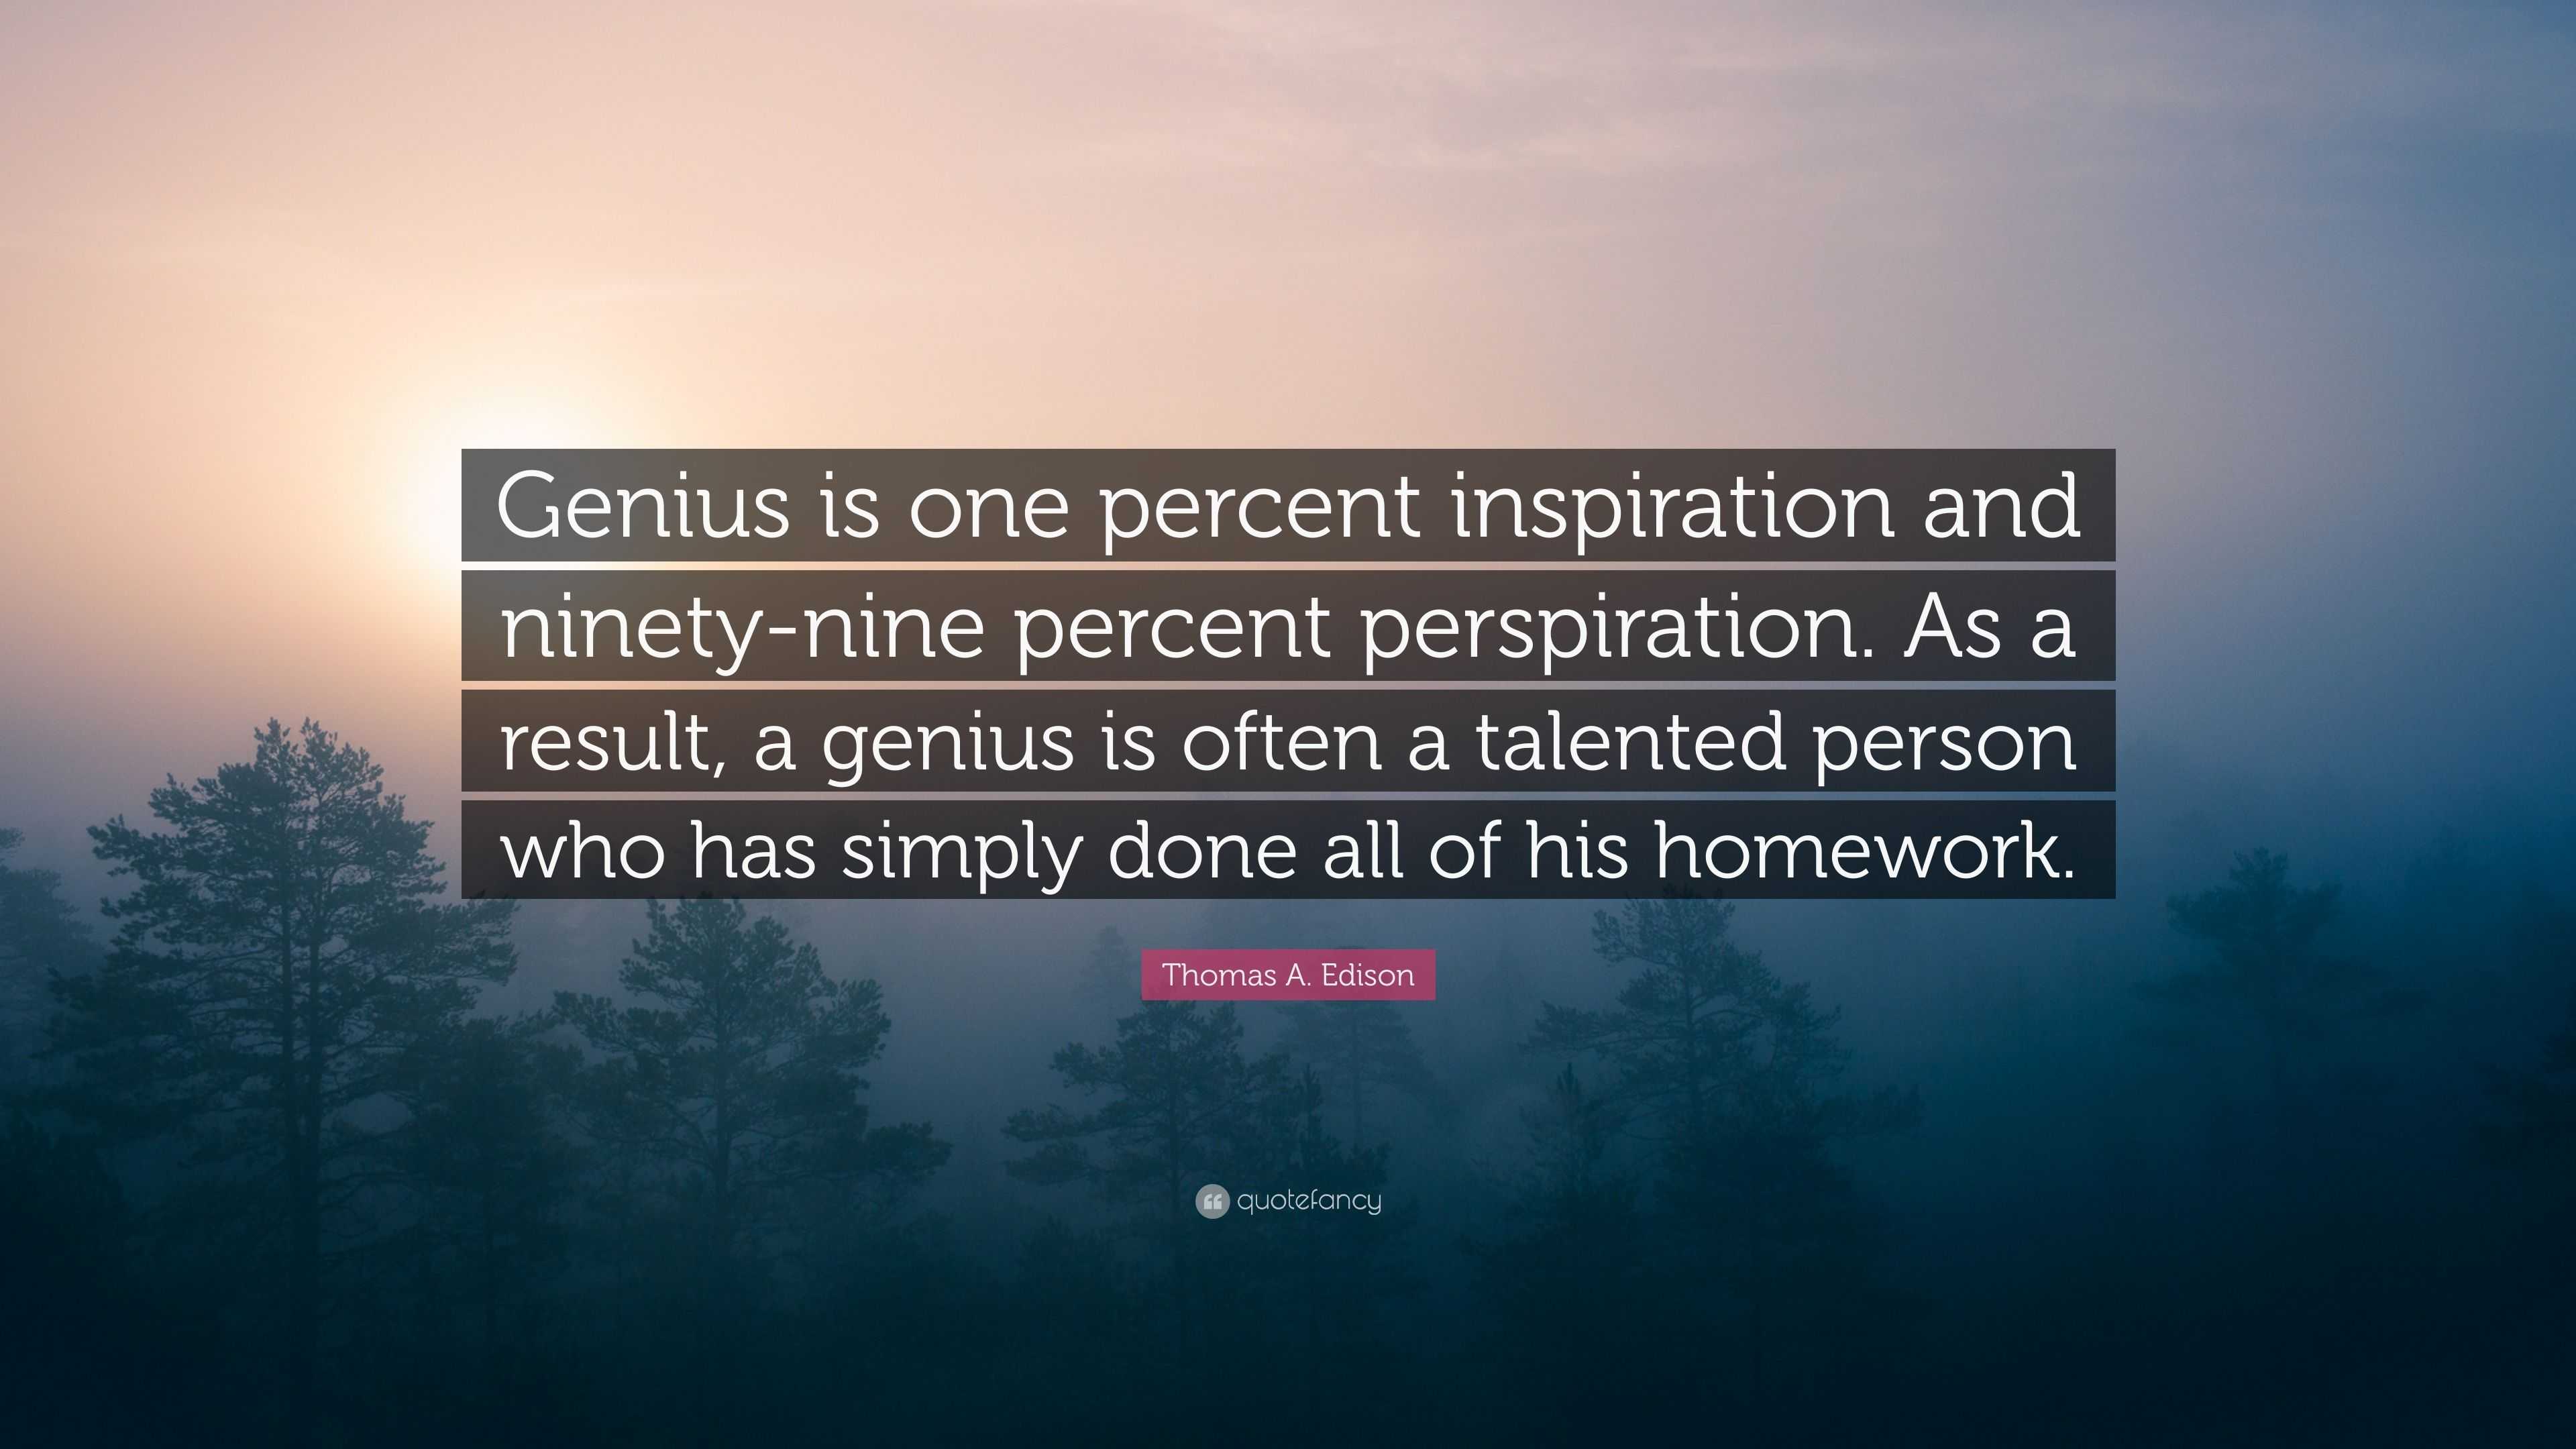 essay about genius person